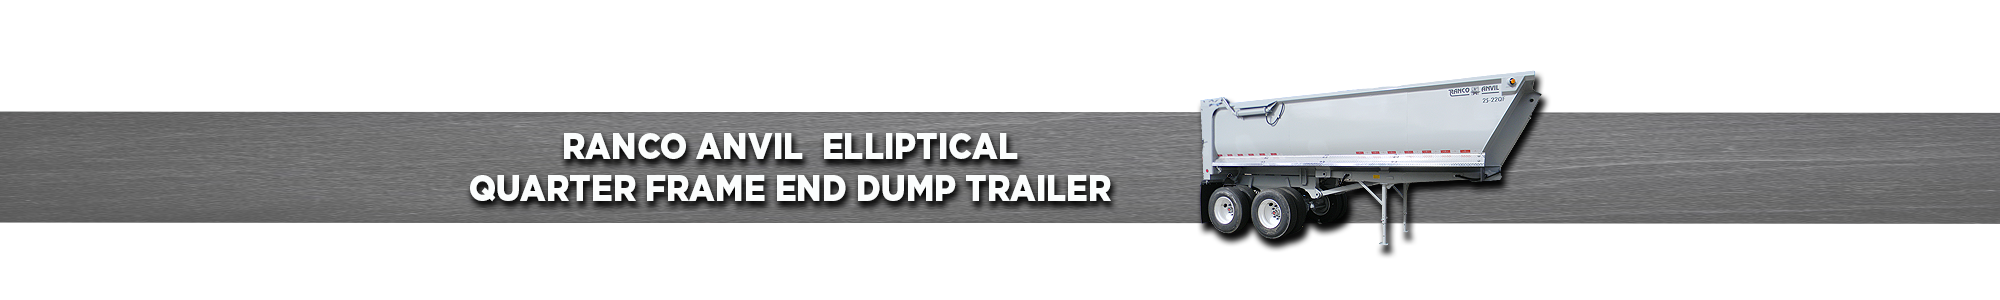 RANCO Anvil Elliptical Quarter Frame End Dump Trailer